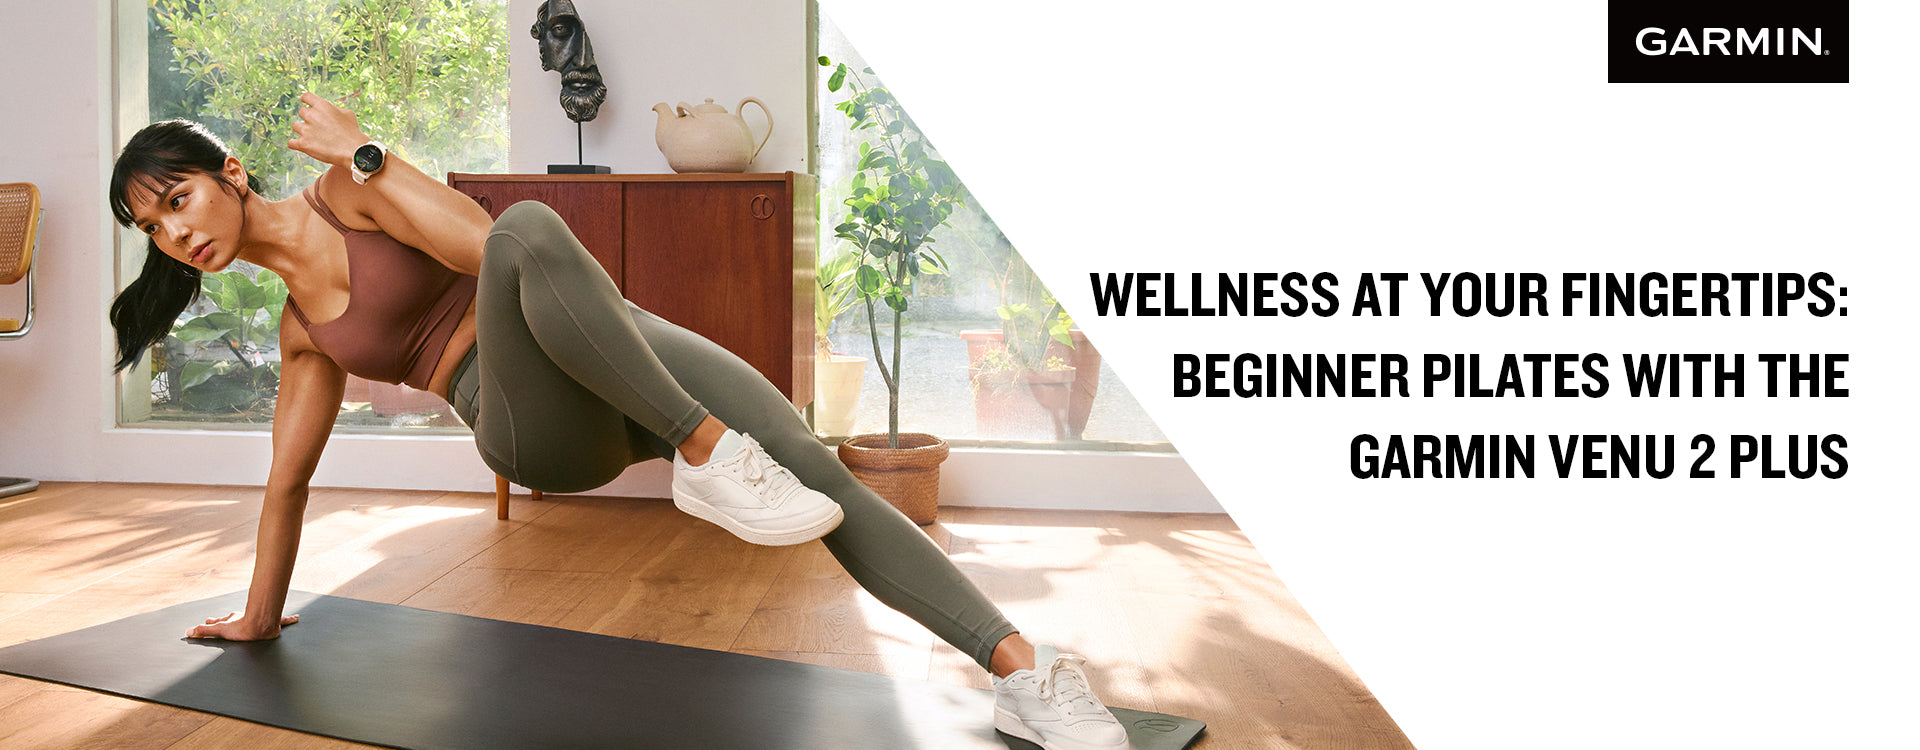 Wellness at your Fingertips: Beginner Pilates with the Garmin Venu 2 Plus